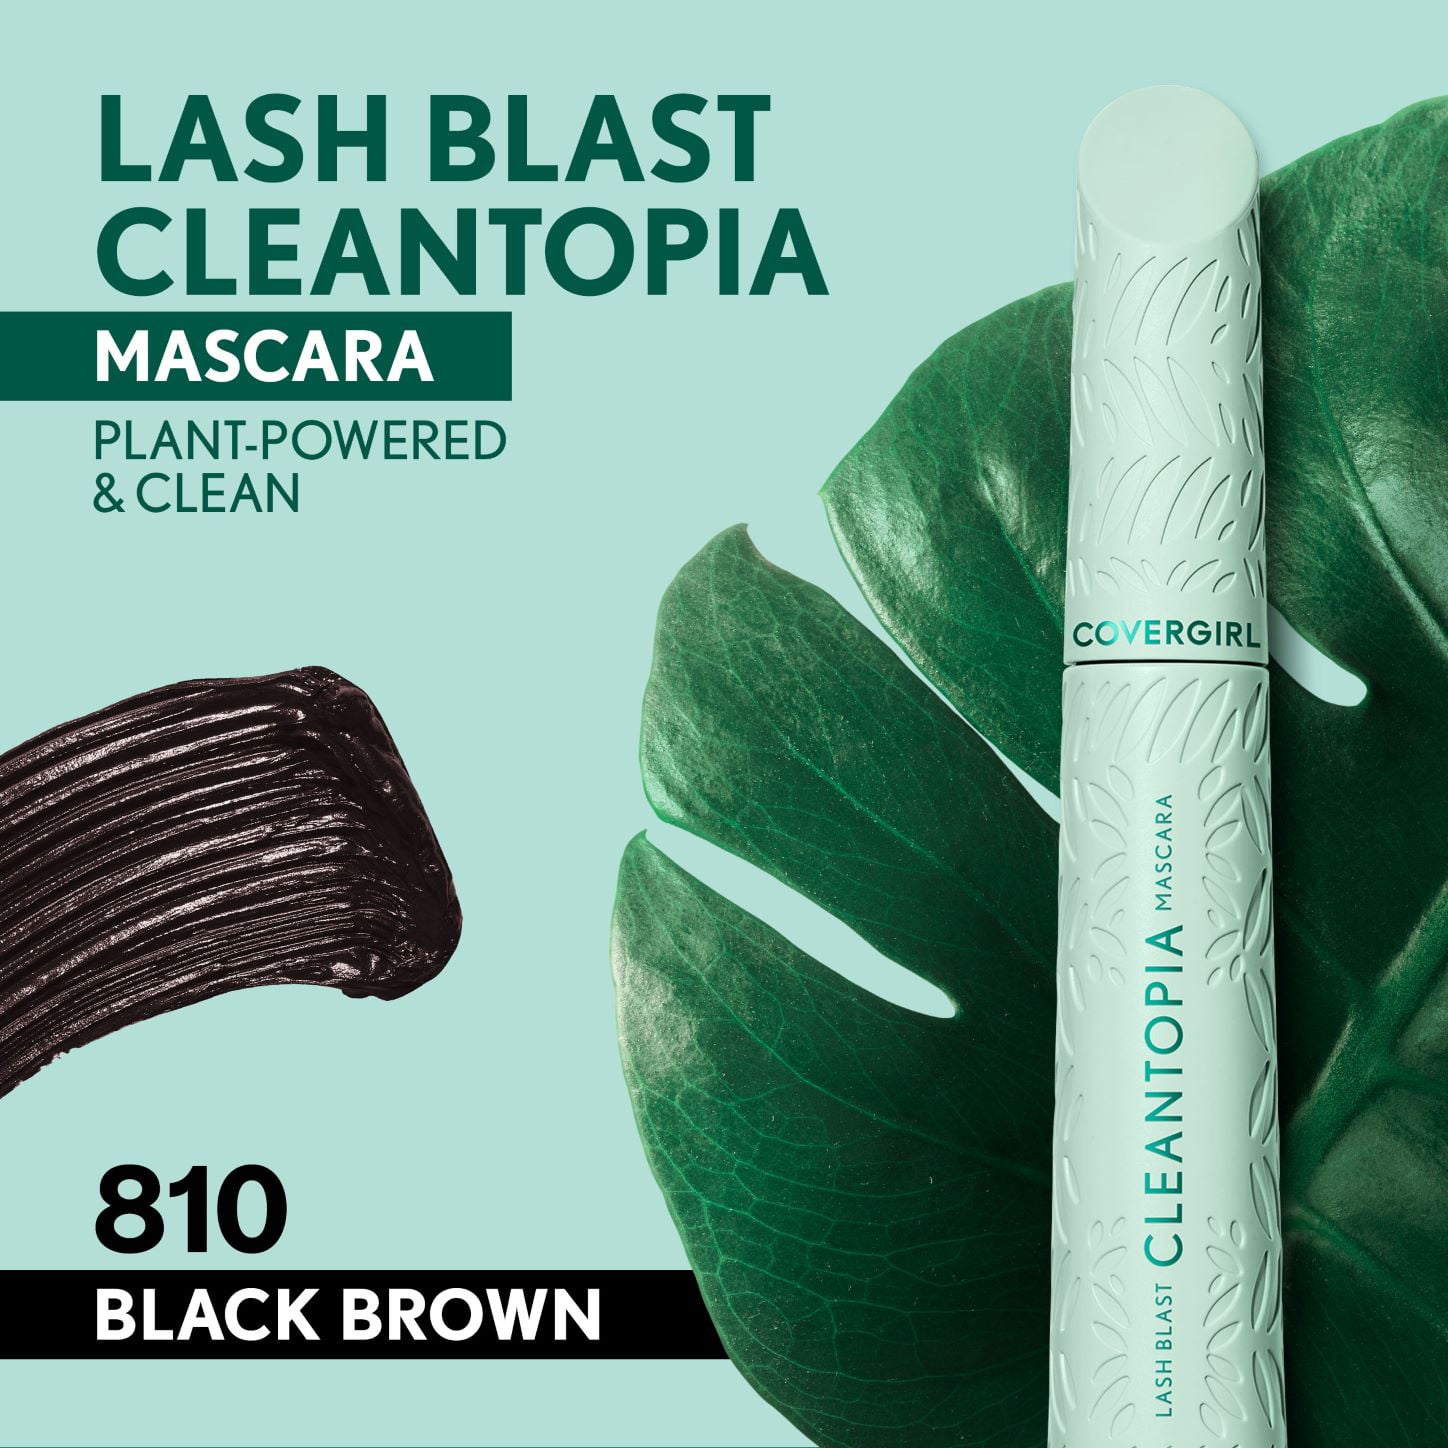 COVERGIRL Lash Blast Cleantopia Mascara, 810 Black Brown, 0.32 fl oz